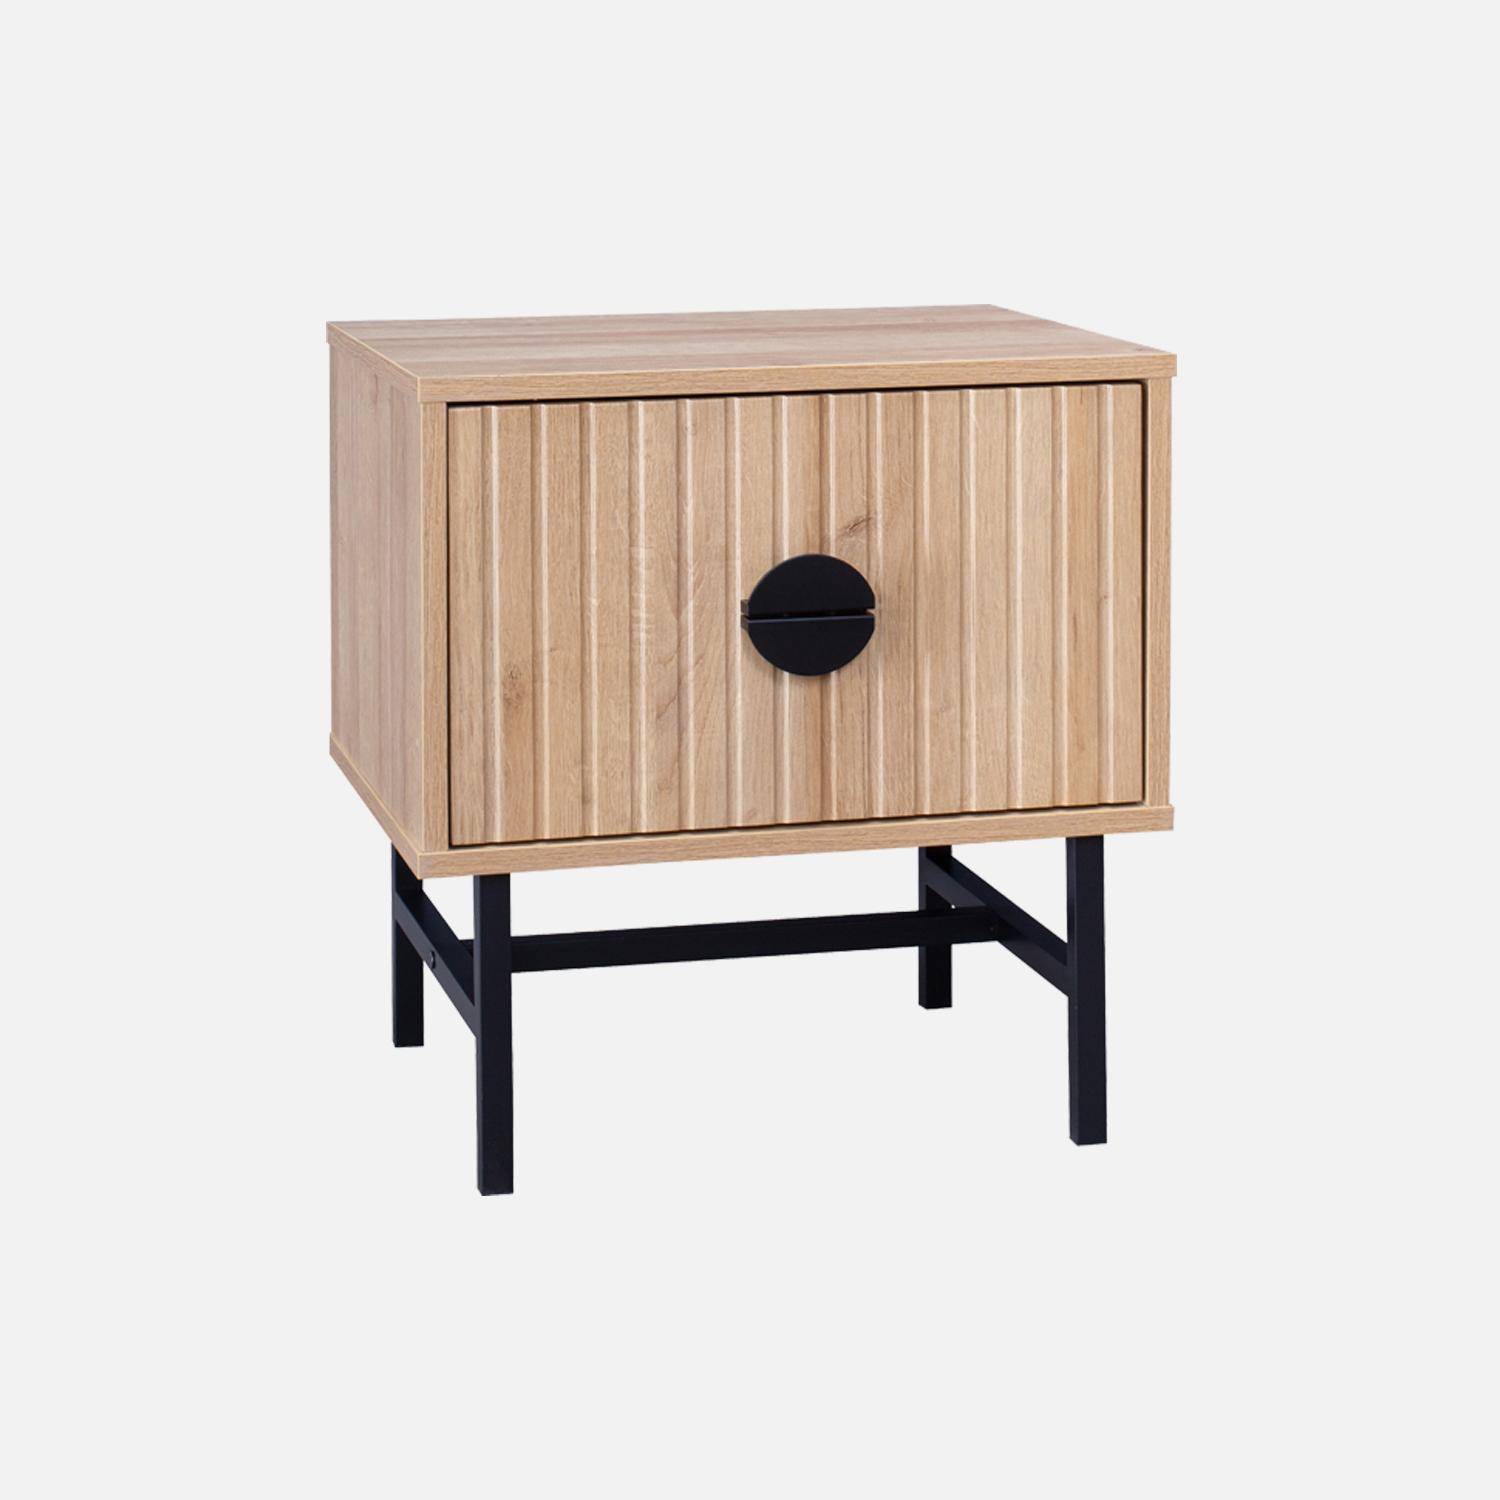 Oak-effect bedside table, grooved wood decor, one drawer, L 48 x W 39 x H 50cm,sweeek,Photo1